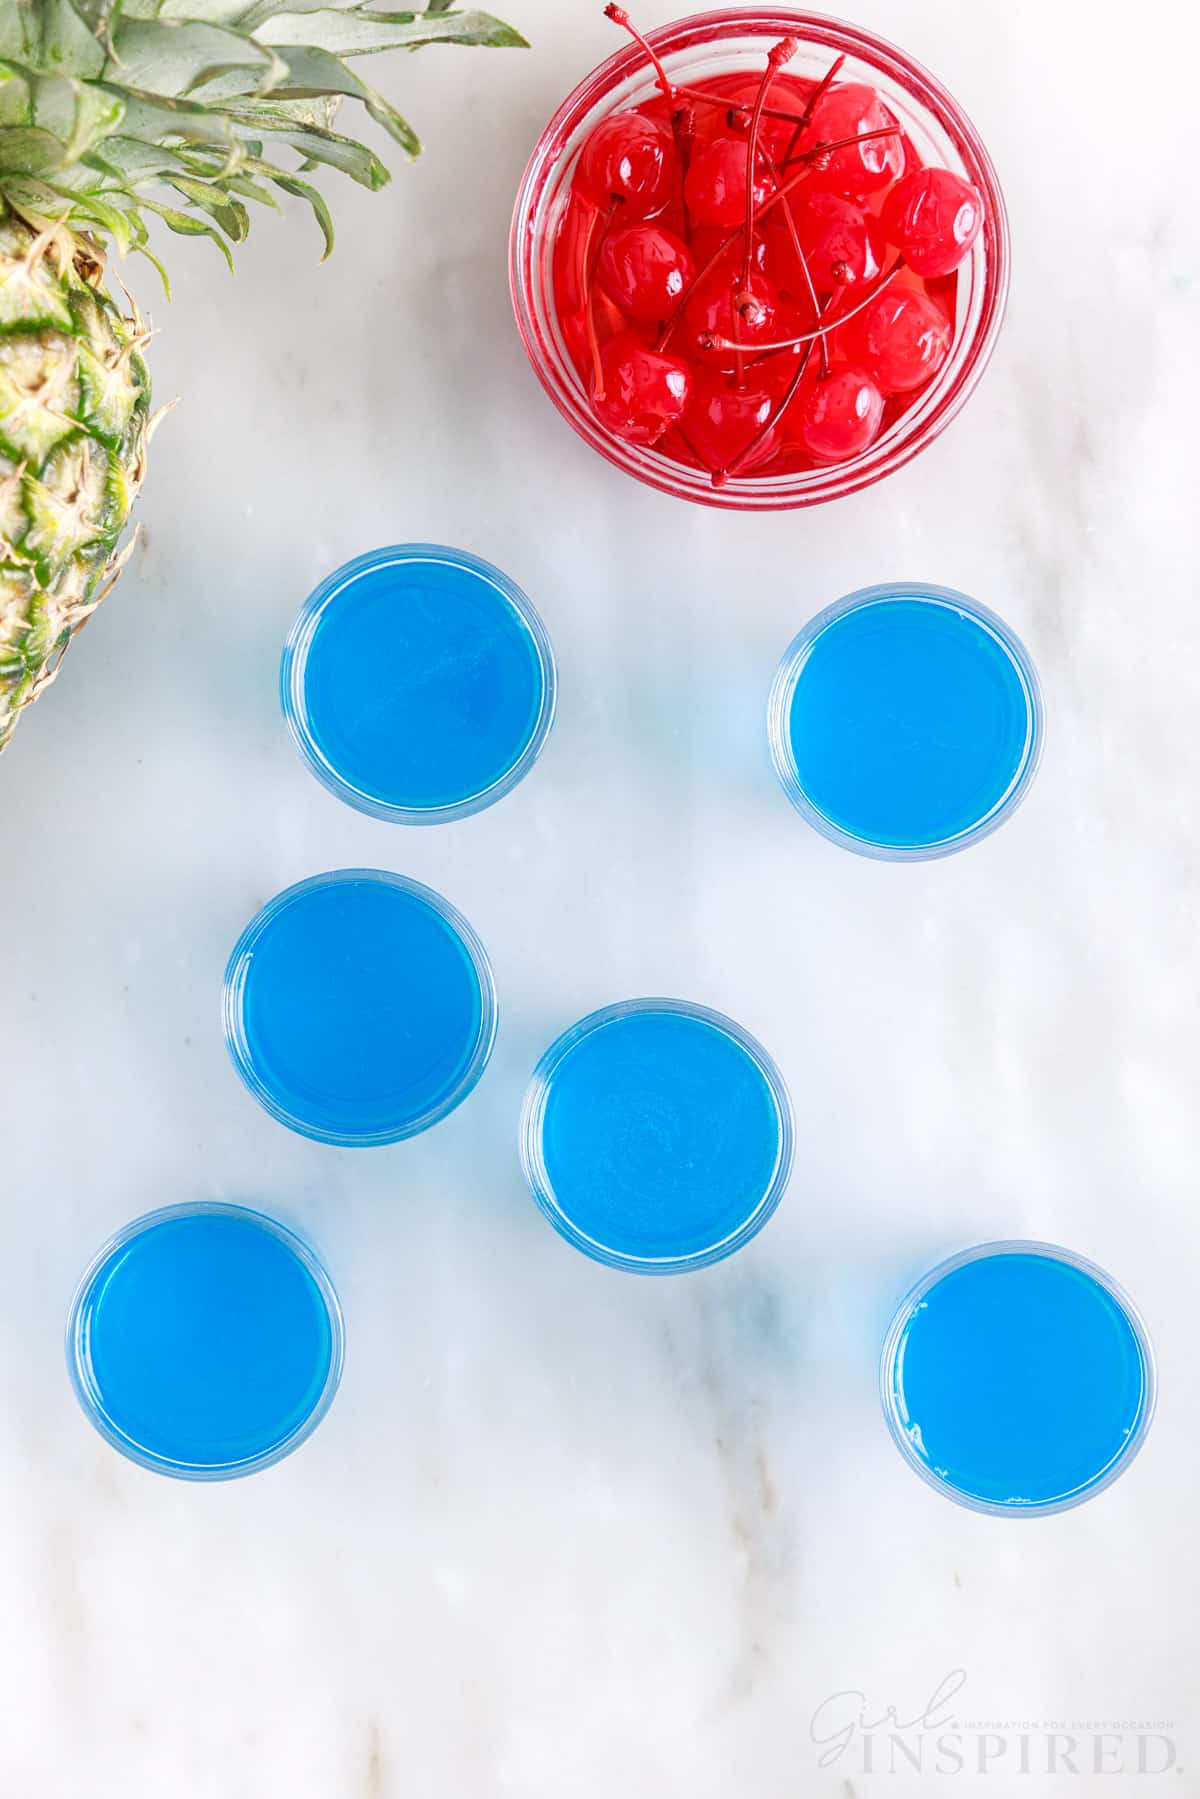 Six Blue Hawaiian Jello Shots next to cherries and a pineapple.